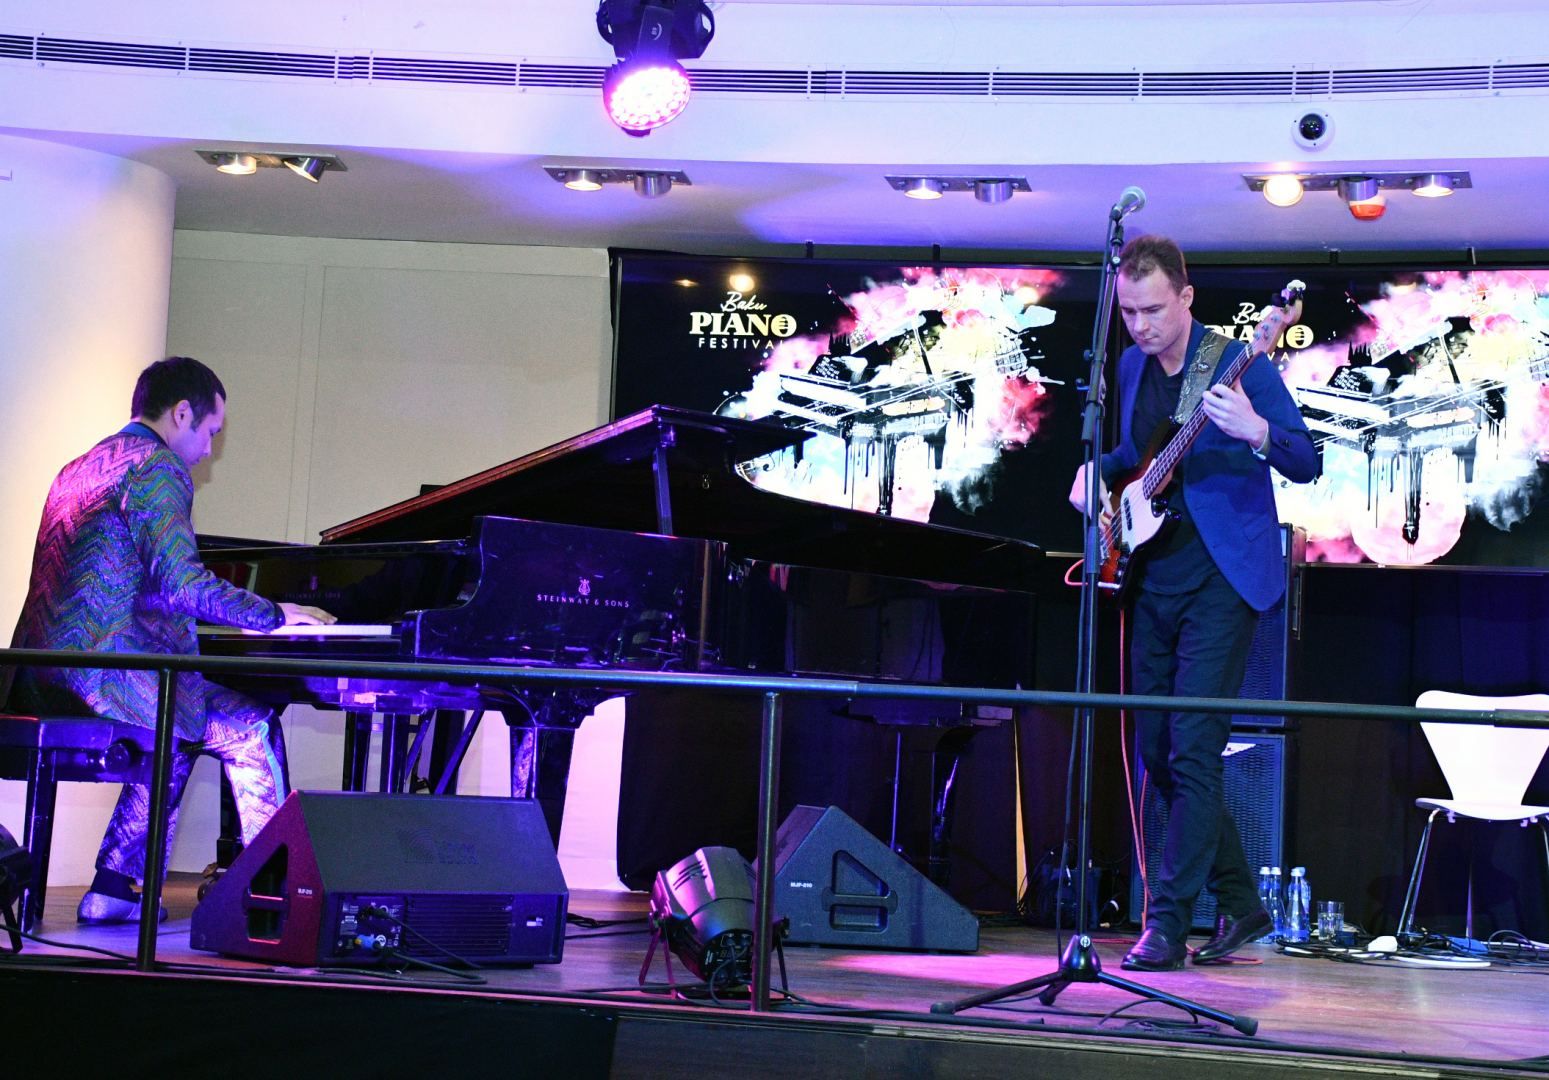 Renowned jazz pianist performs in Baku [PHOTO/VIDEO] - Gallery Image